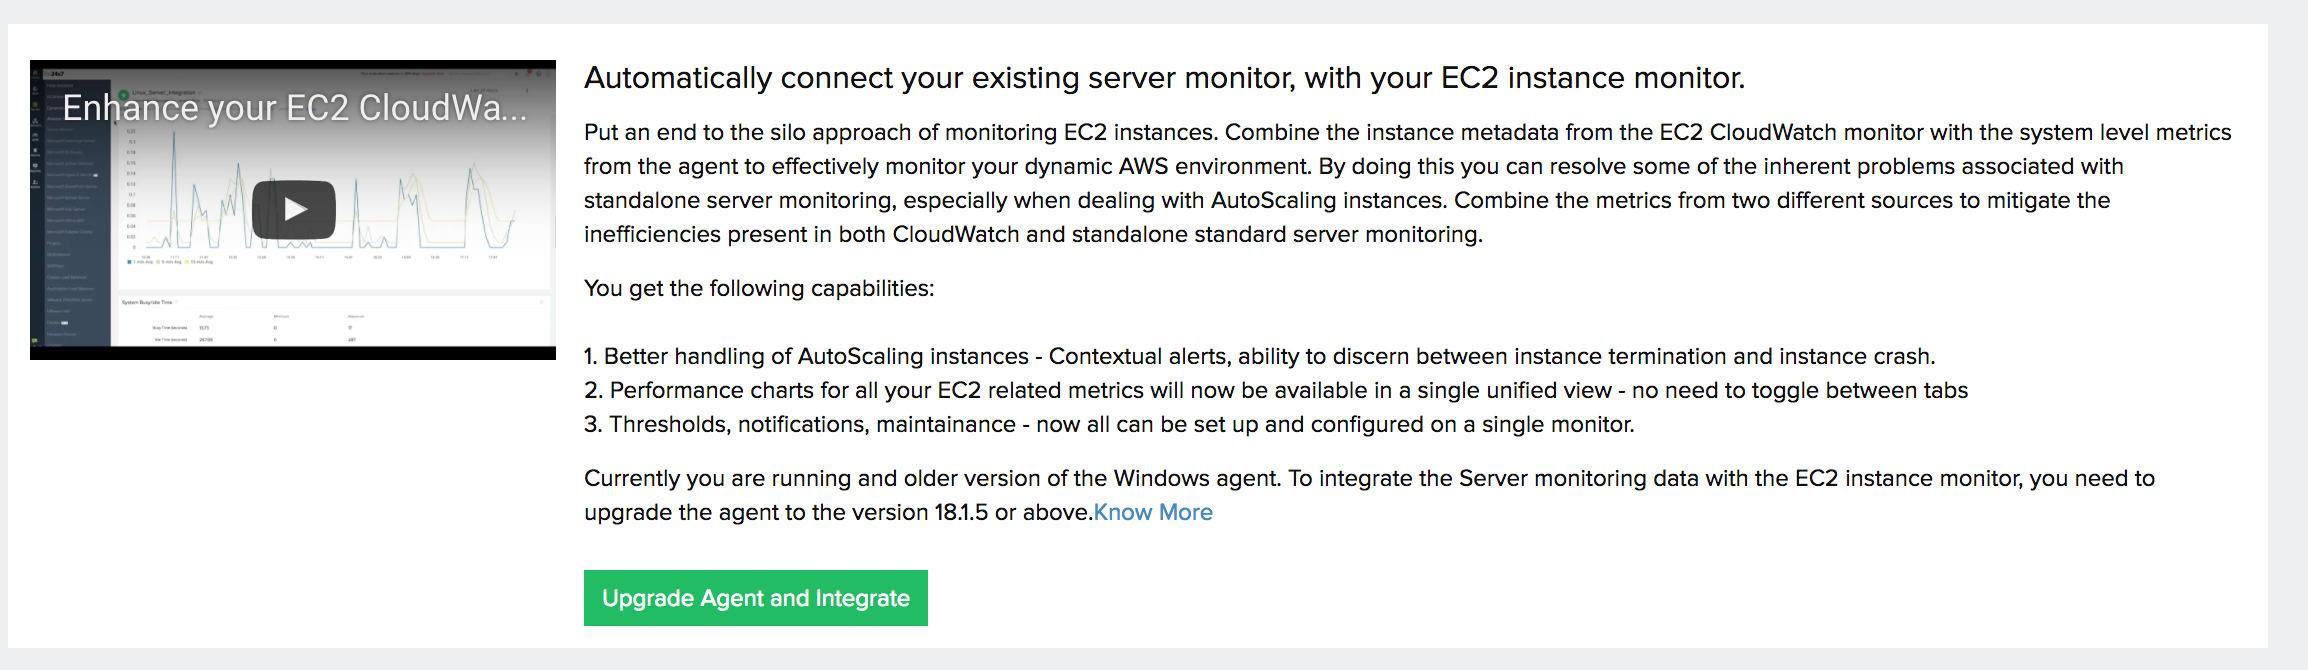 EC2-server-integrate-page